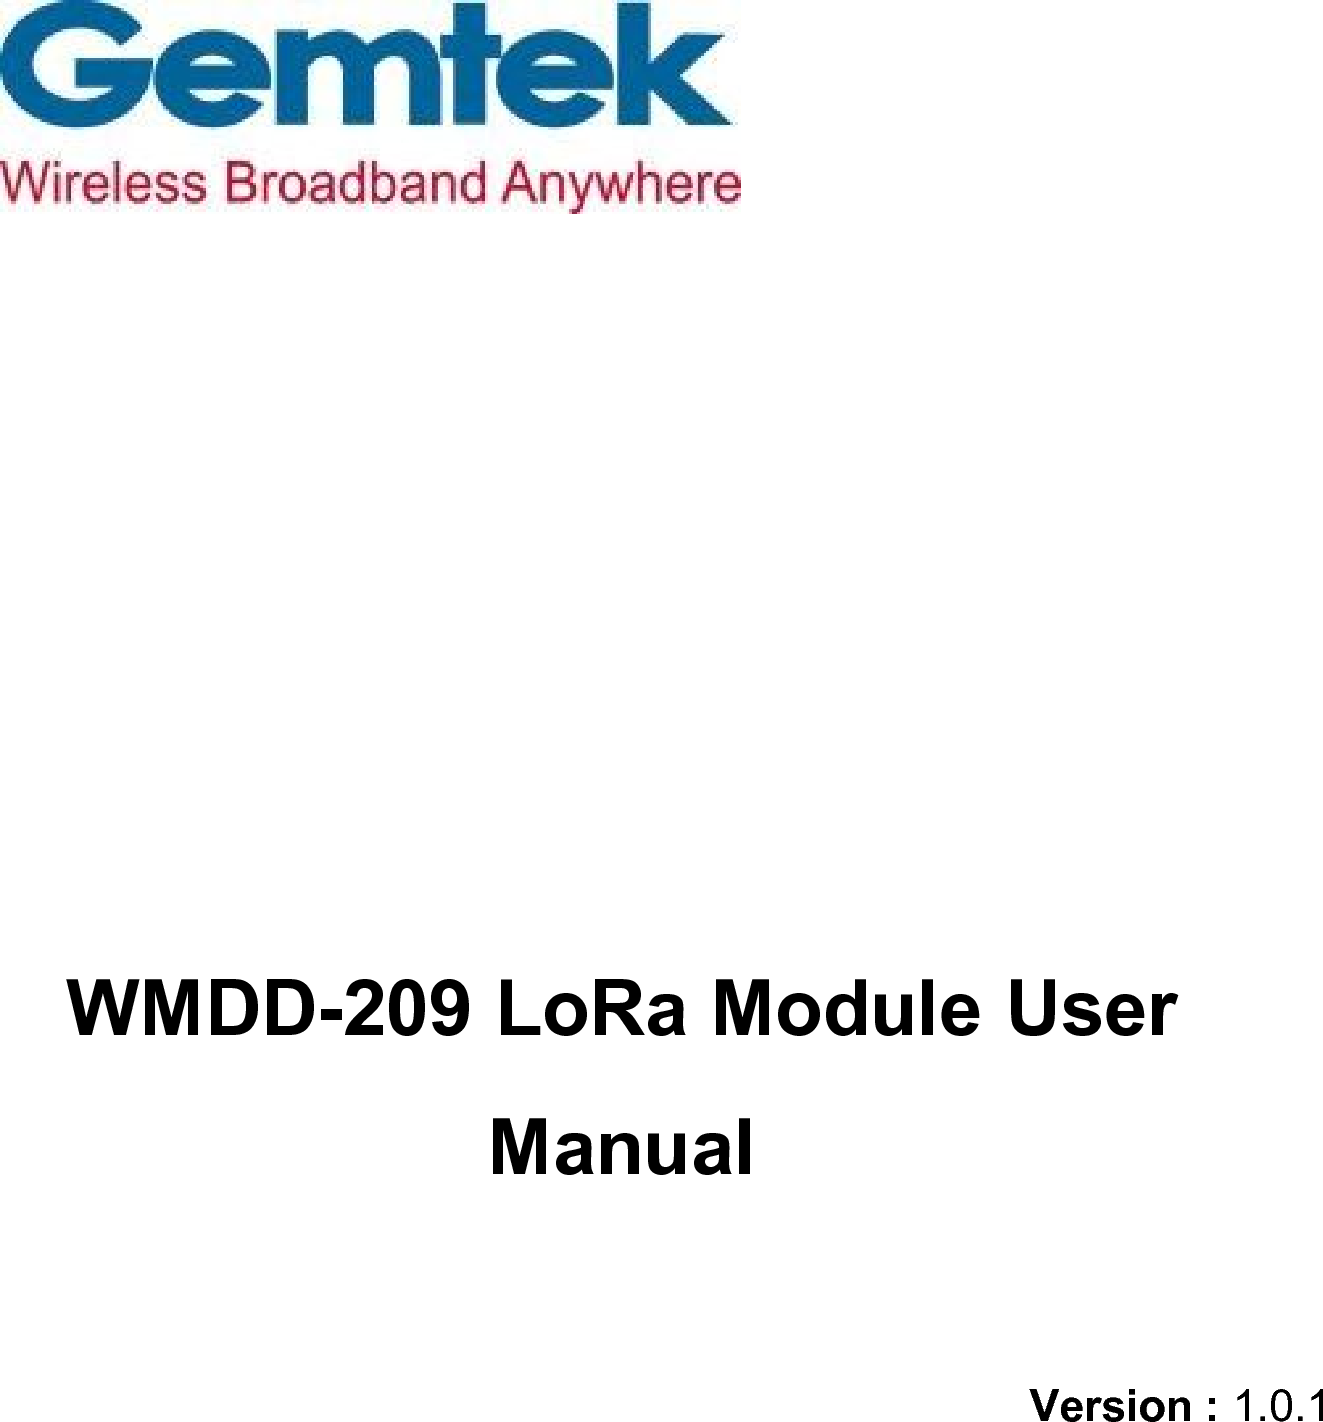                           WMDD-209 LoRa Module User Manual  Version : 1.0.1        